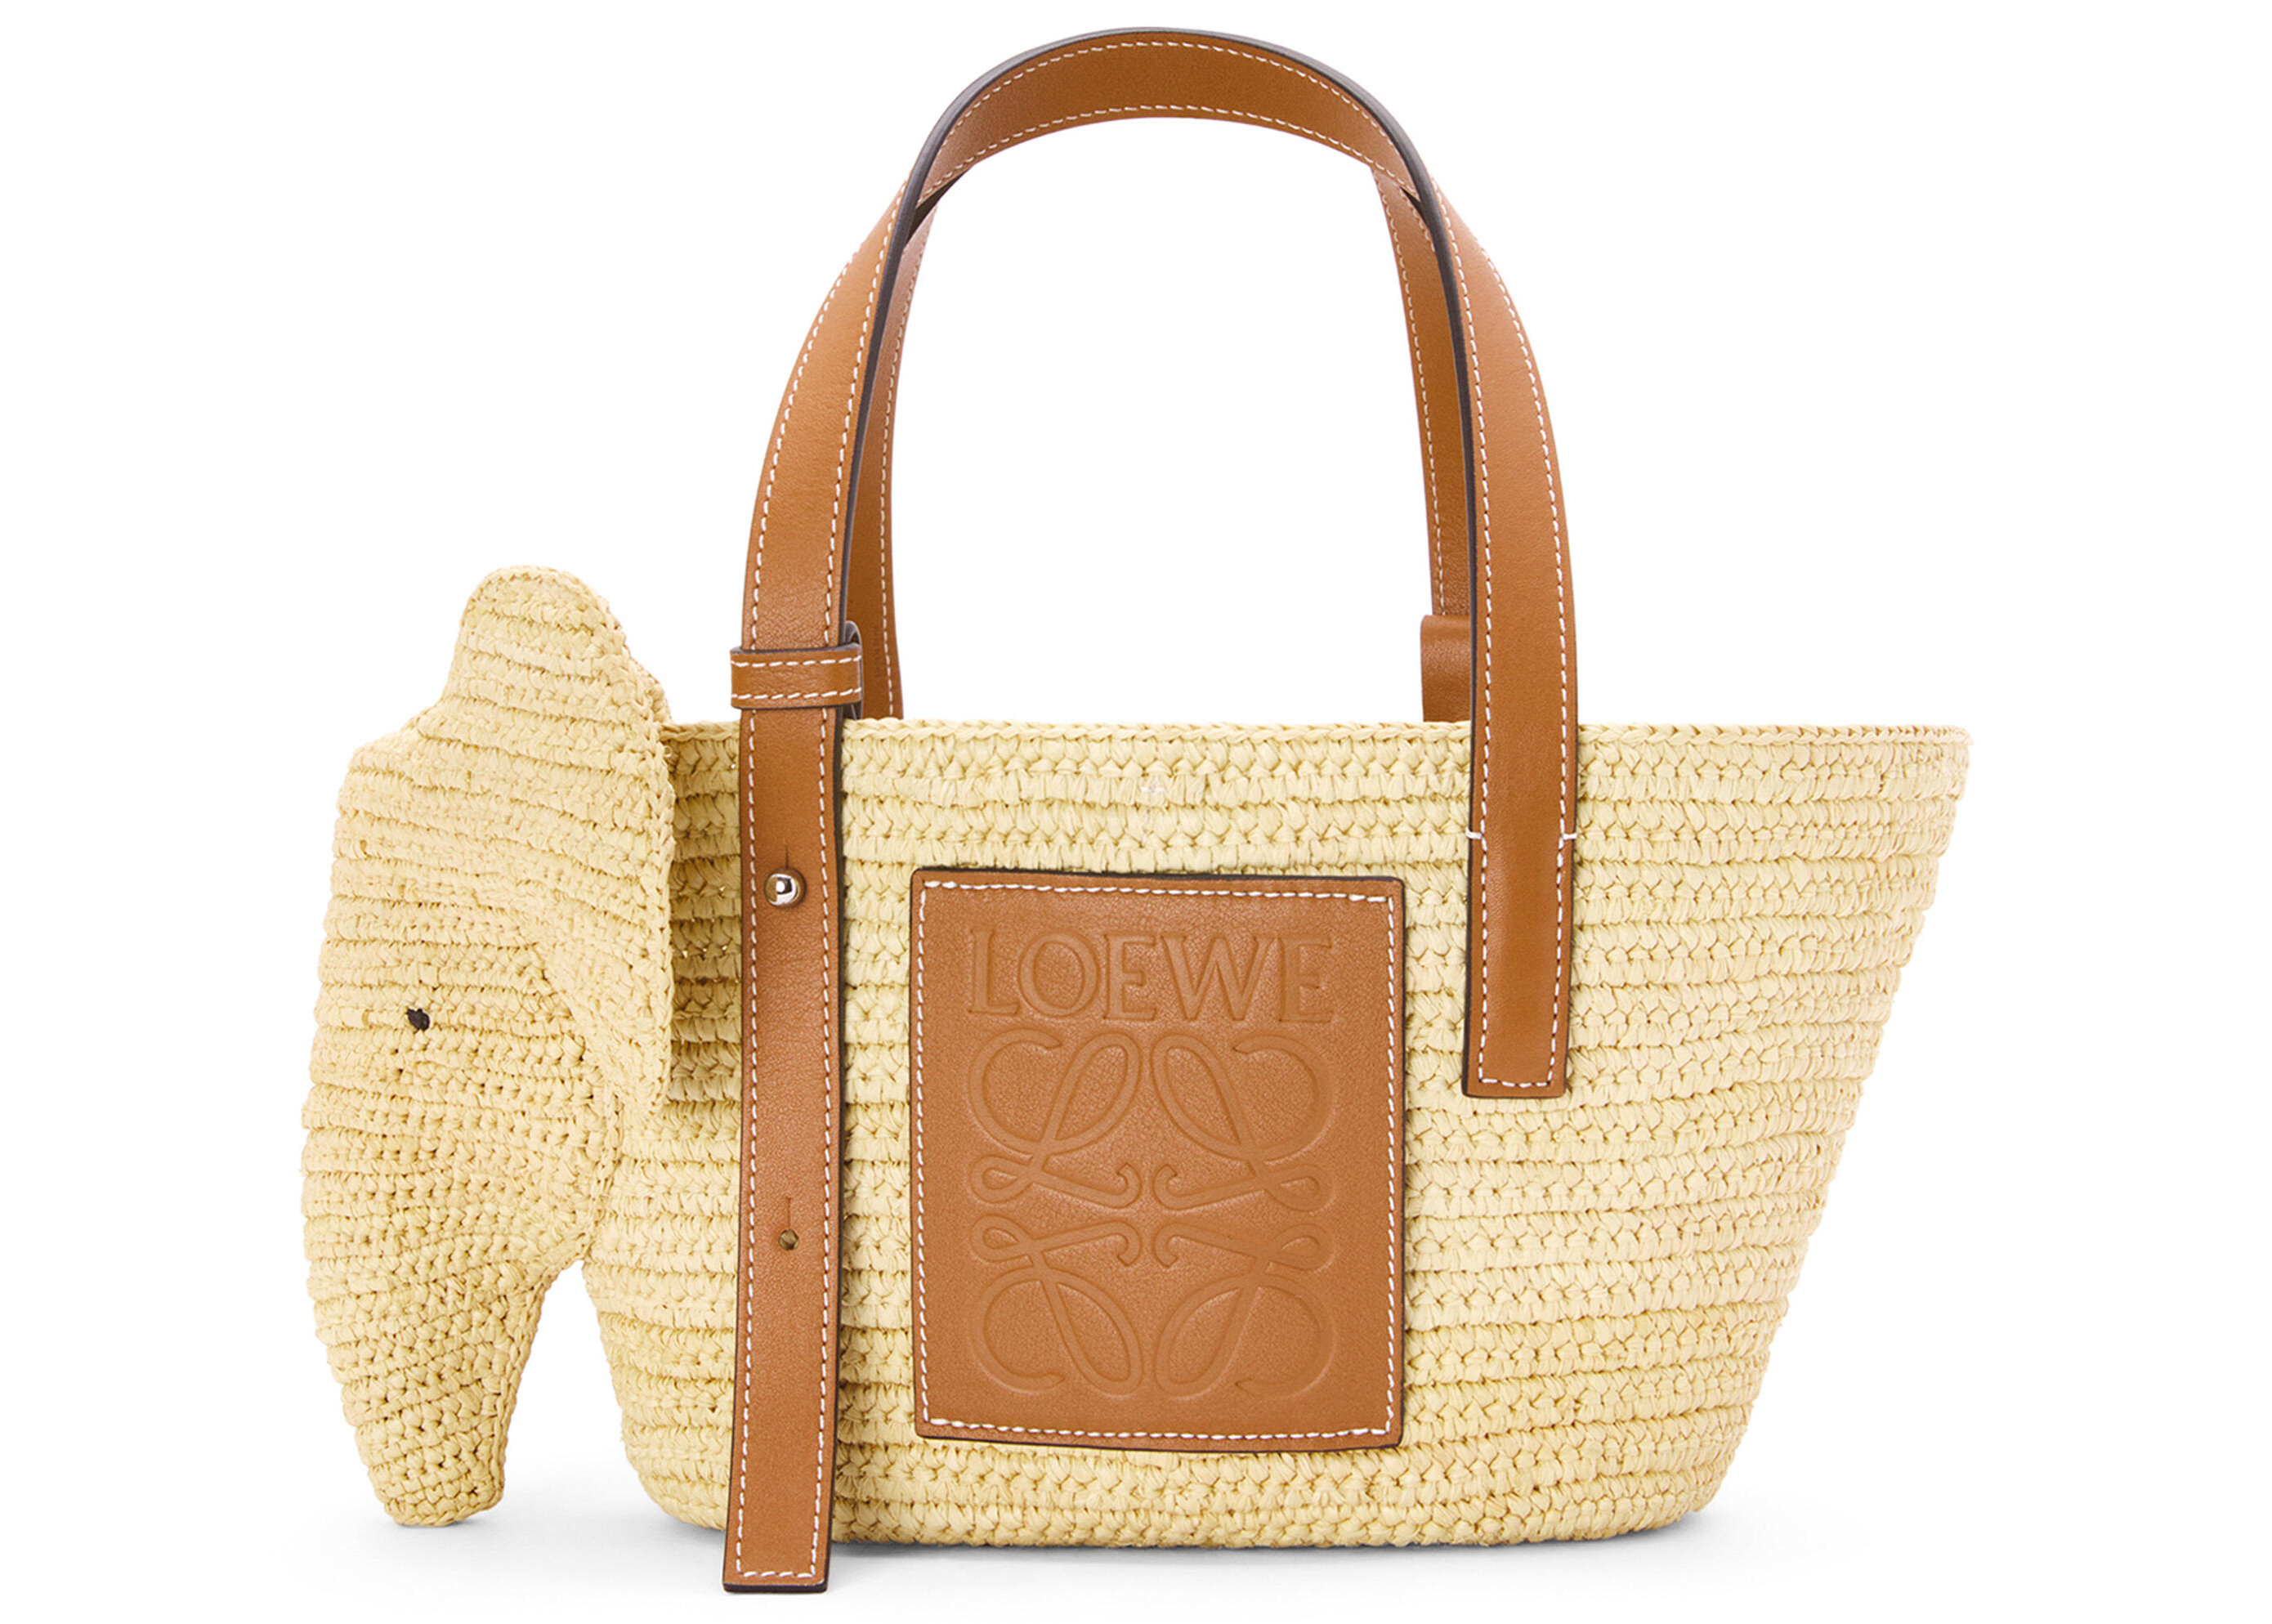 LOEWE Elephant Basket Bag in Raffia And Calfskin Small Natural/Tan